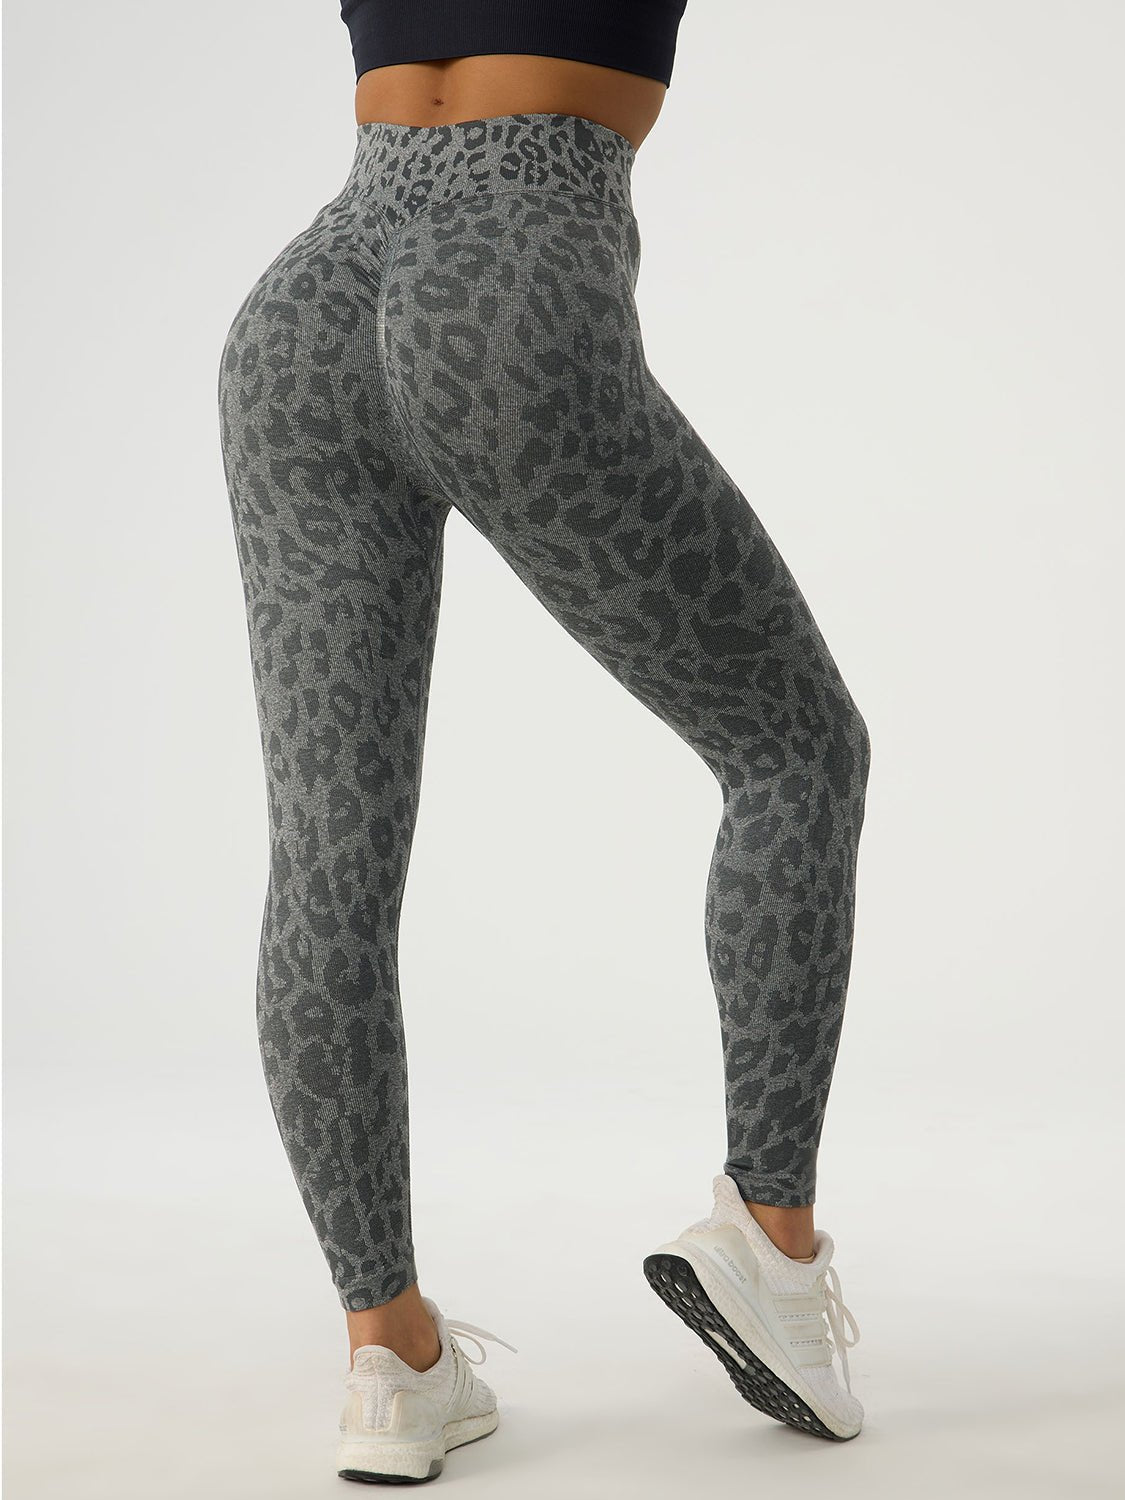 Leopard High Waist Active Pants - OMG! Rose